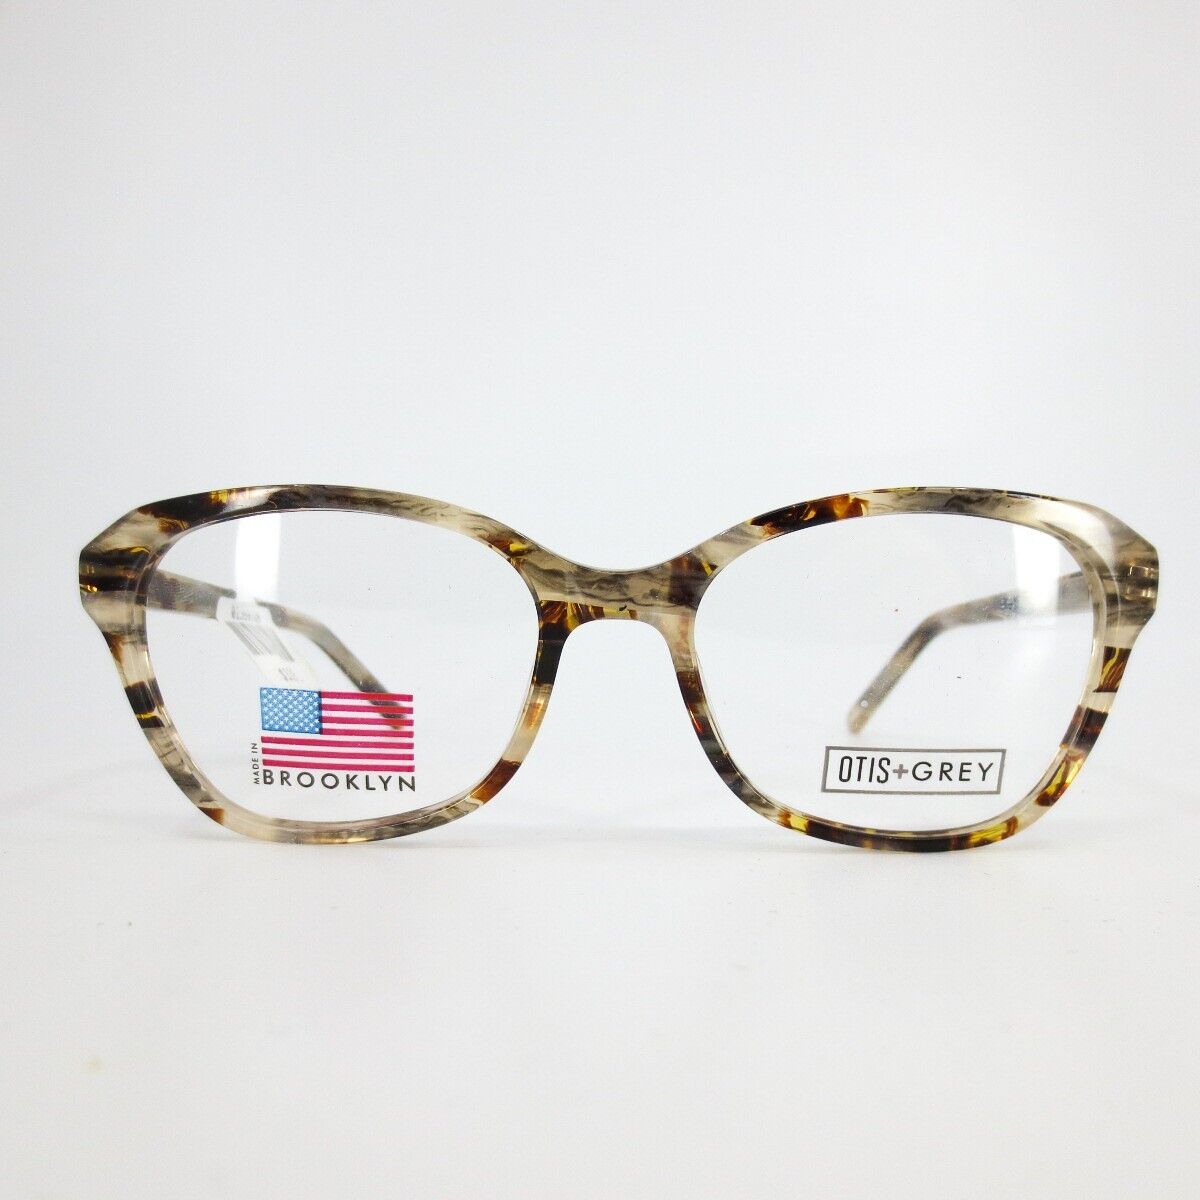 OTIS+GREY OG US 20208 357 Brown Amber Round Eyeglasses Frames 50-17-140